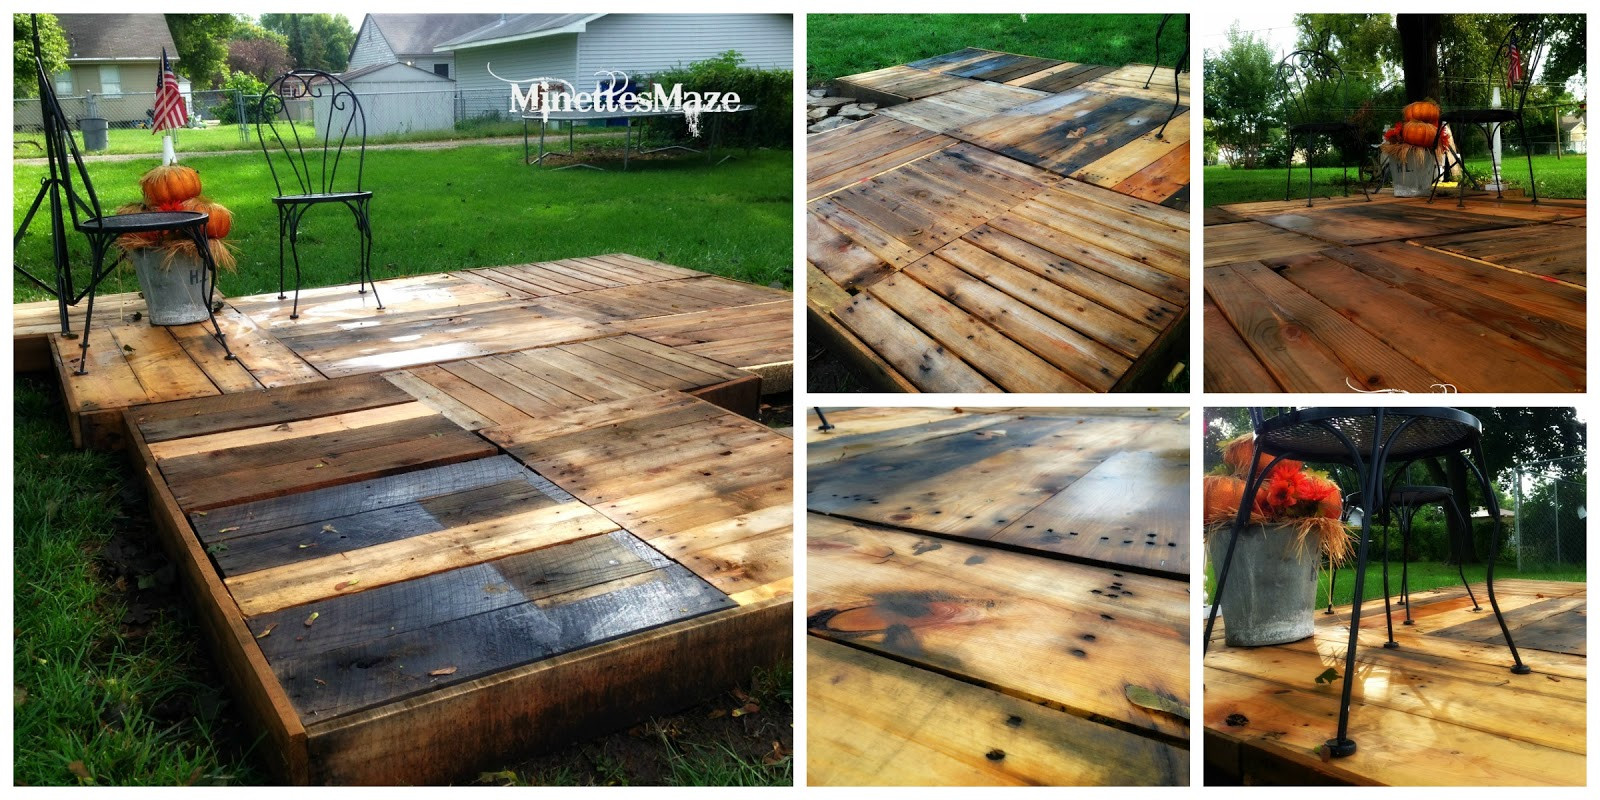 Best ideas about DIY Wood Deck
. Save or Pin MinettesMaze DIY Pallet Deck Now.